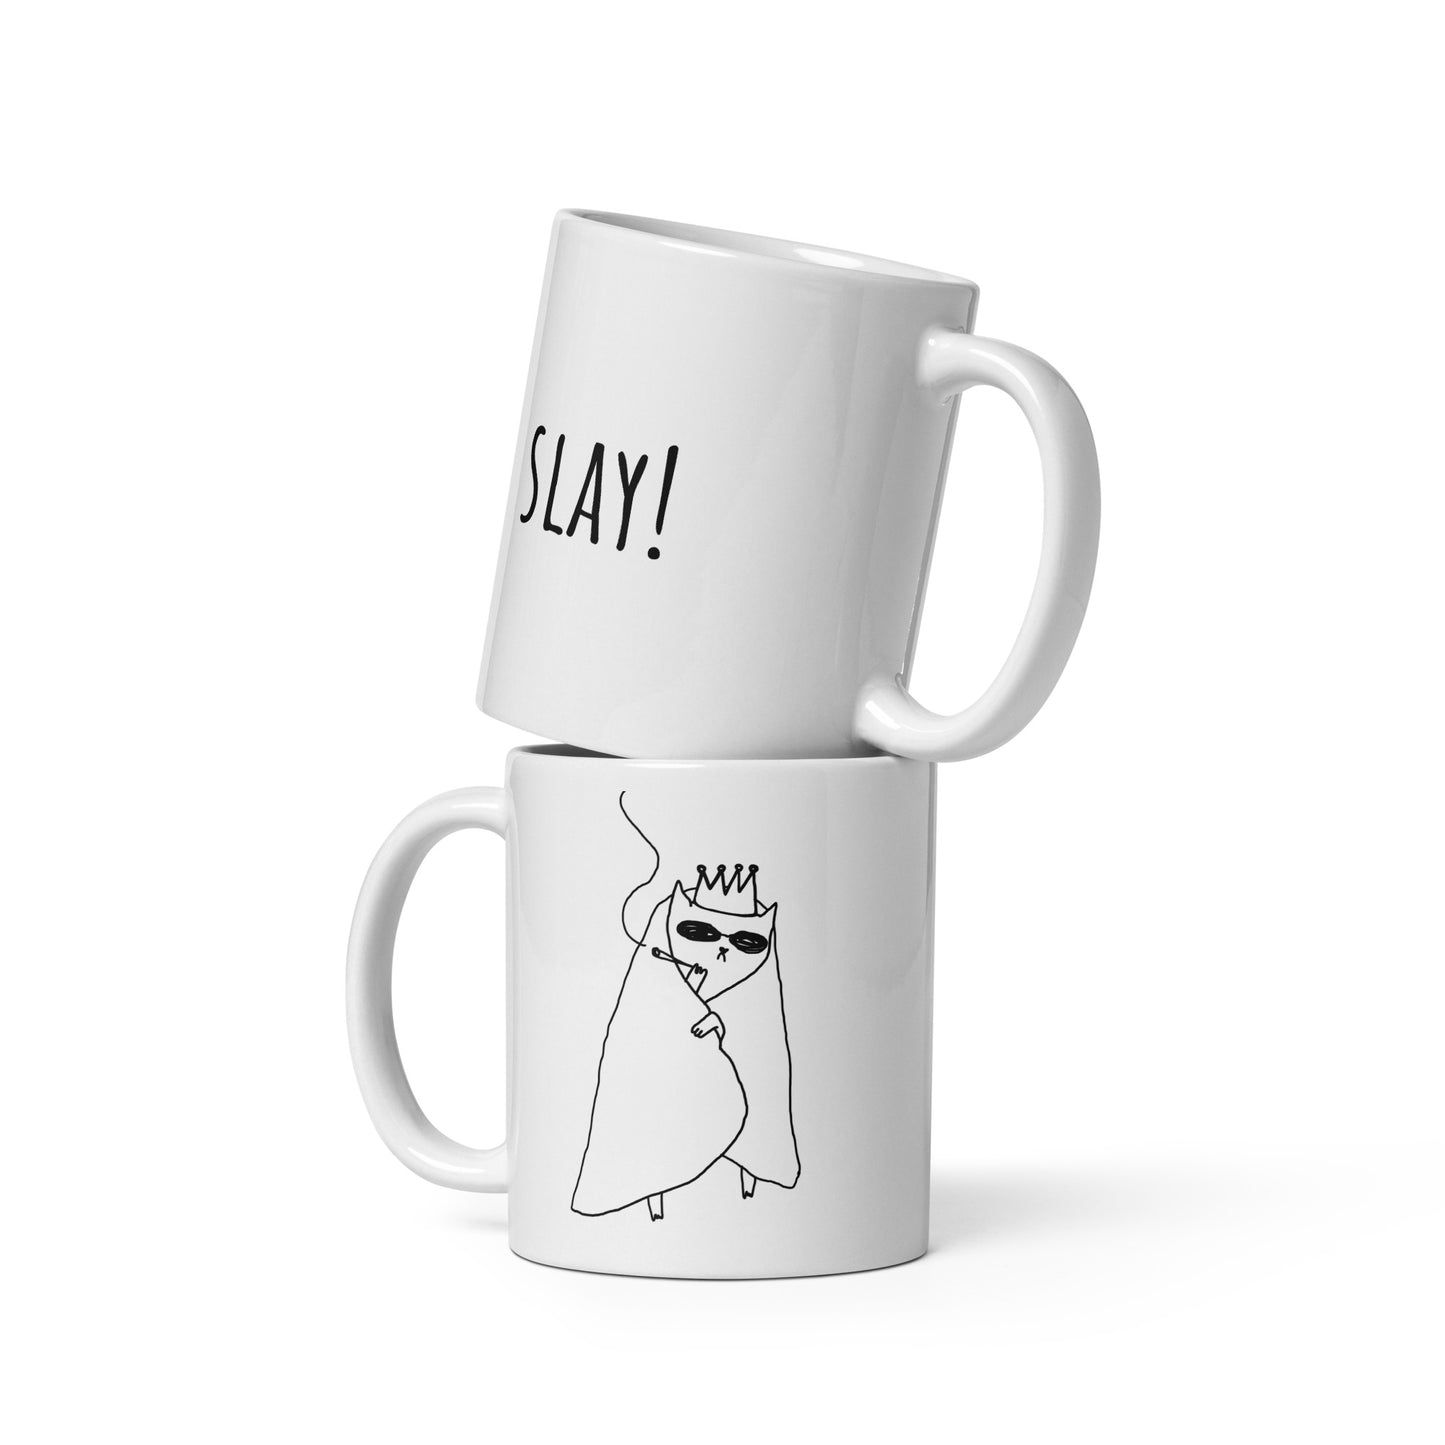 Slay! - White glossy mug